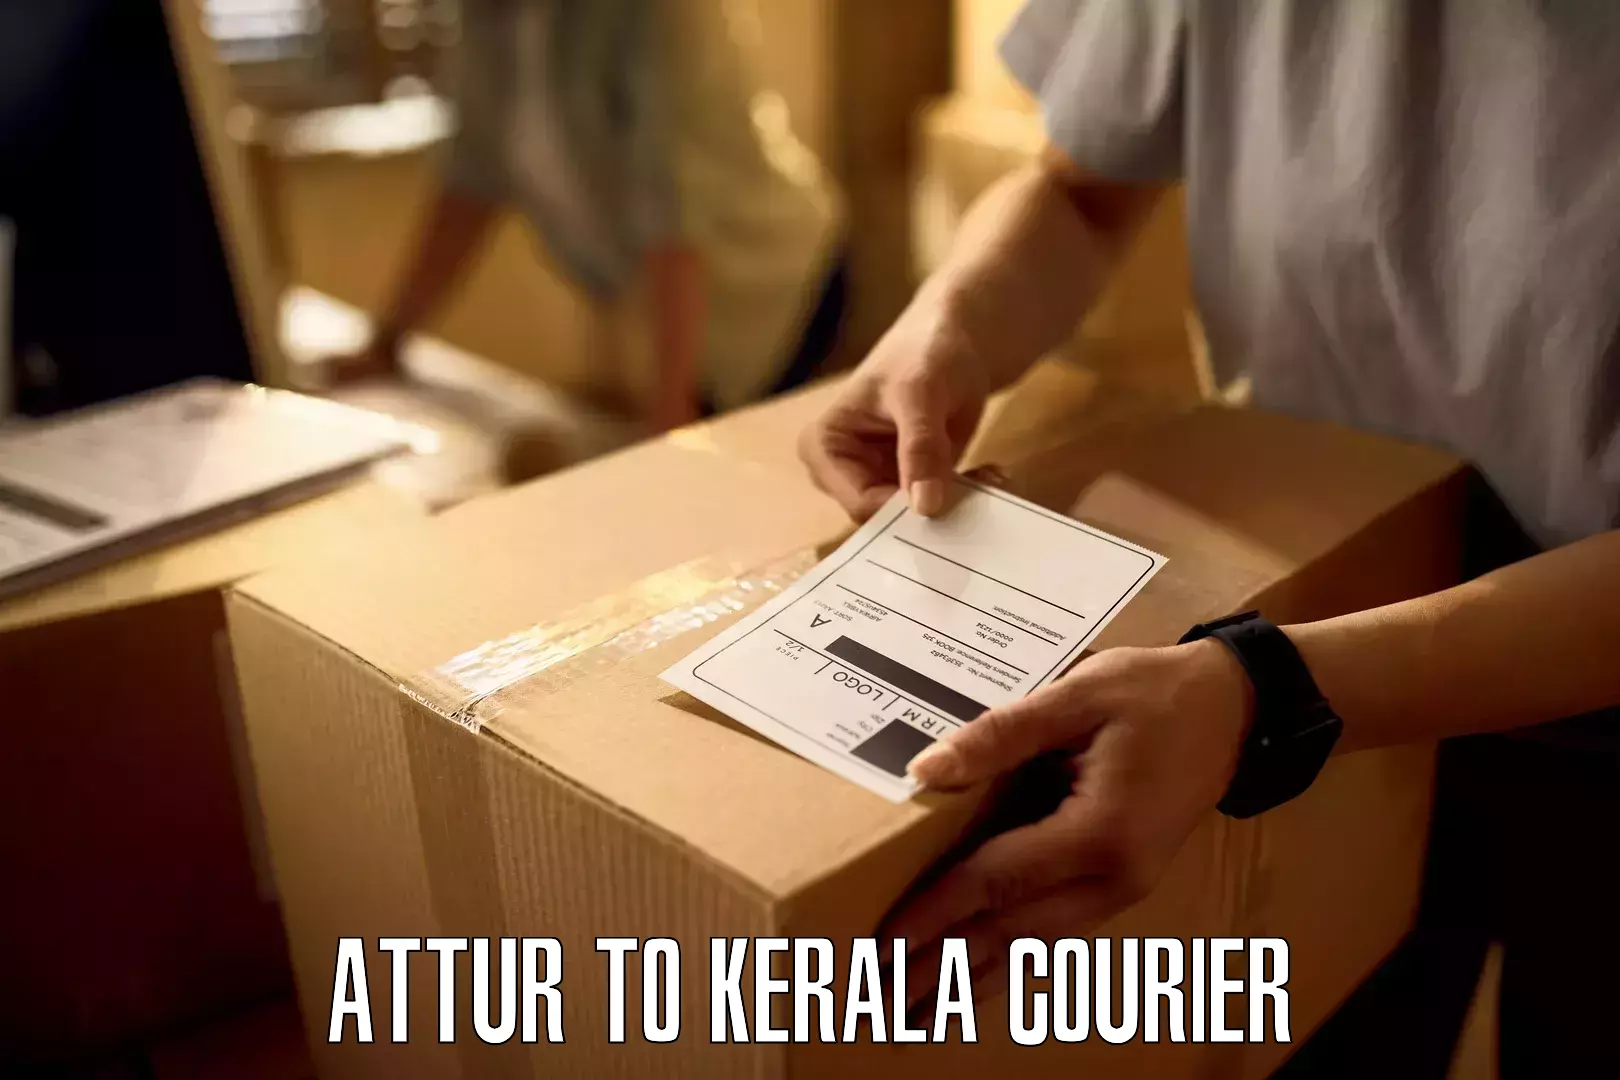 Local delivery service Attur to Kerala